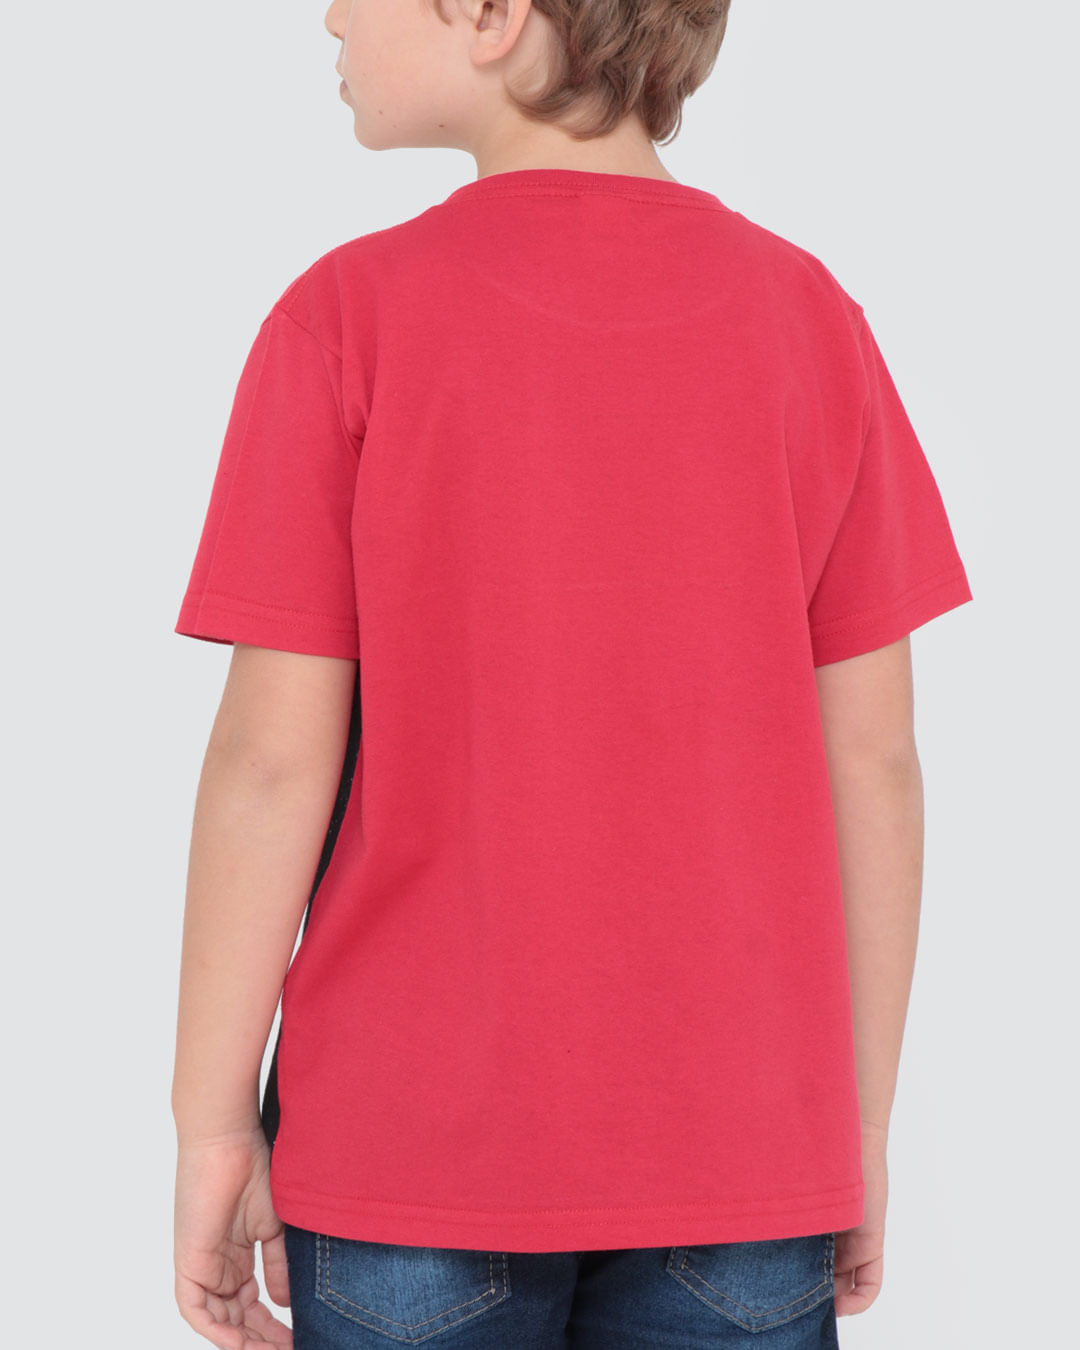 Camiseta-Infantil-Estampa-Frontal-Recorte-Vermelha